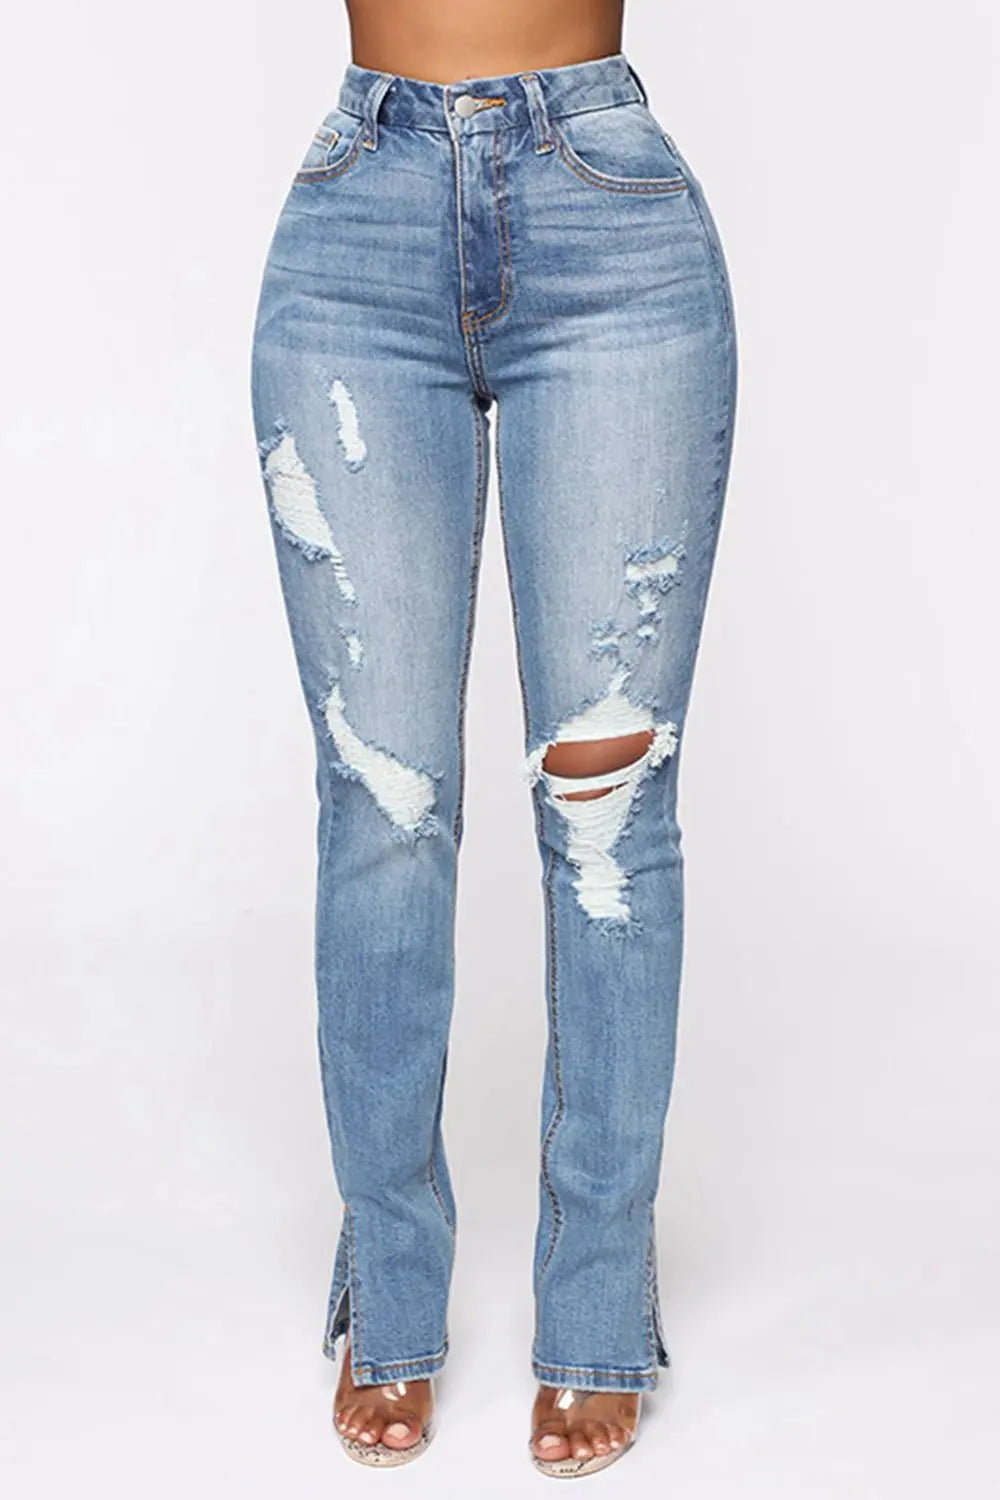 Distressed Slit Jeans - Image #1